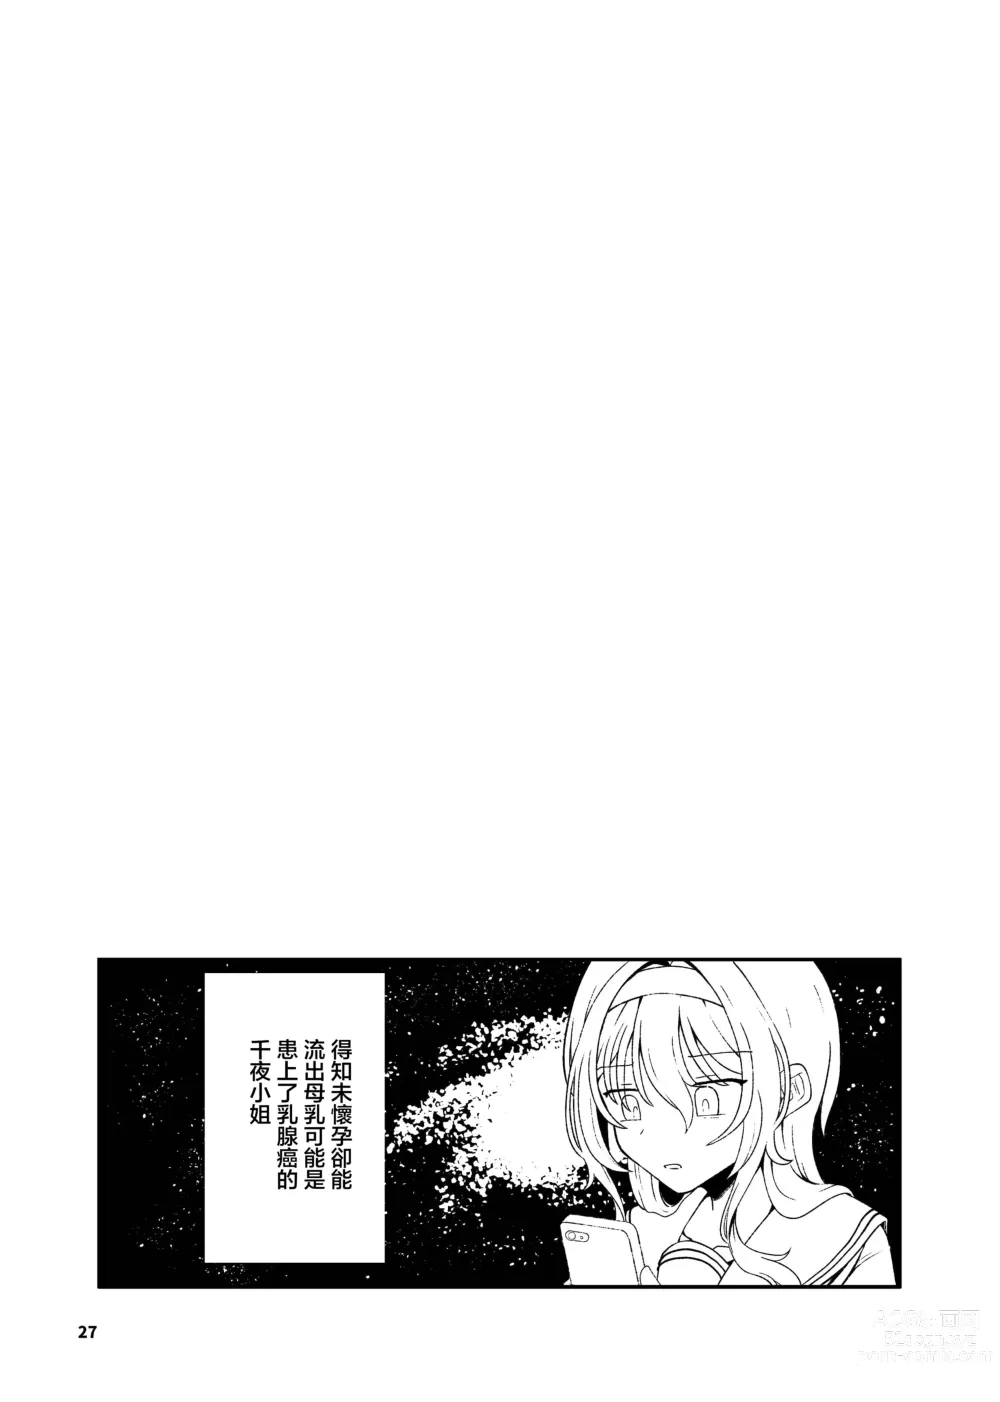 Page 28 of doujinshi 黑埼千歲黃色漫畫總編本